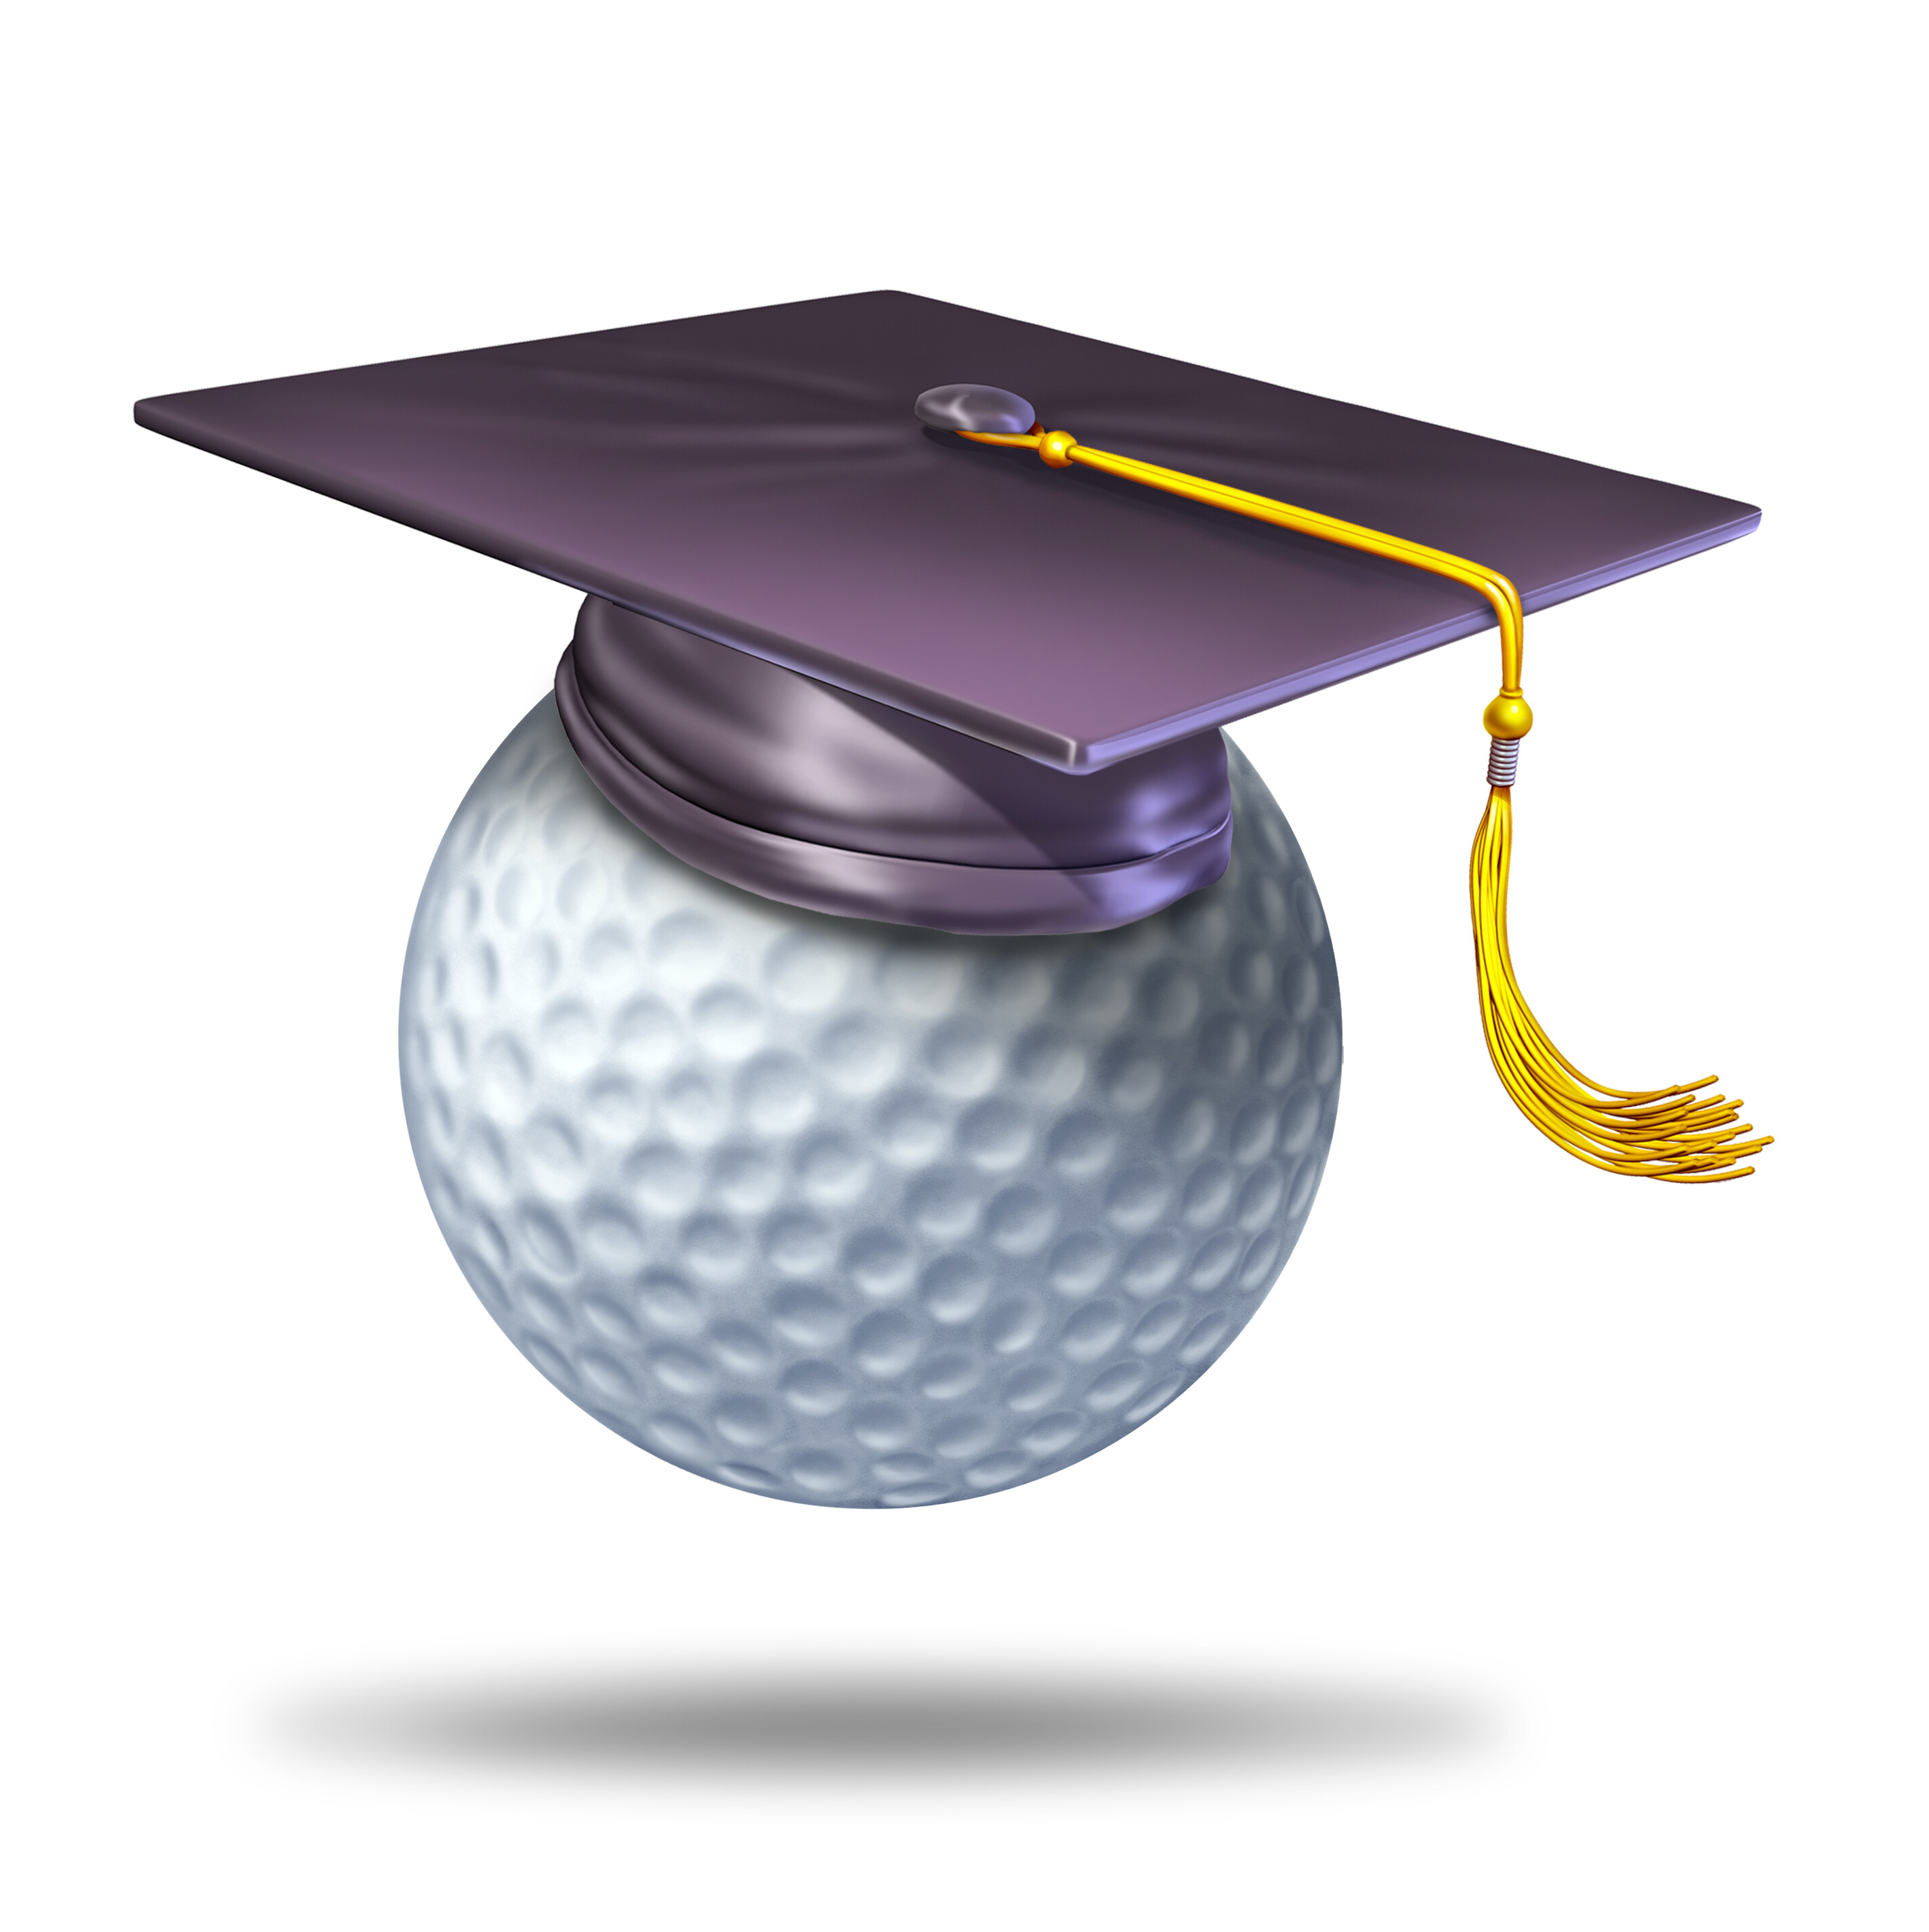 The Golf Education Partnership